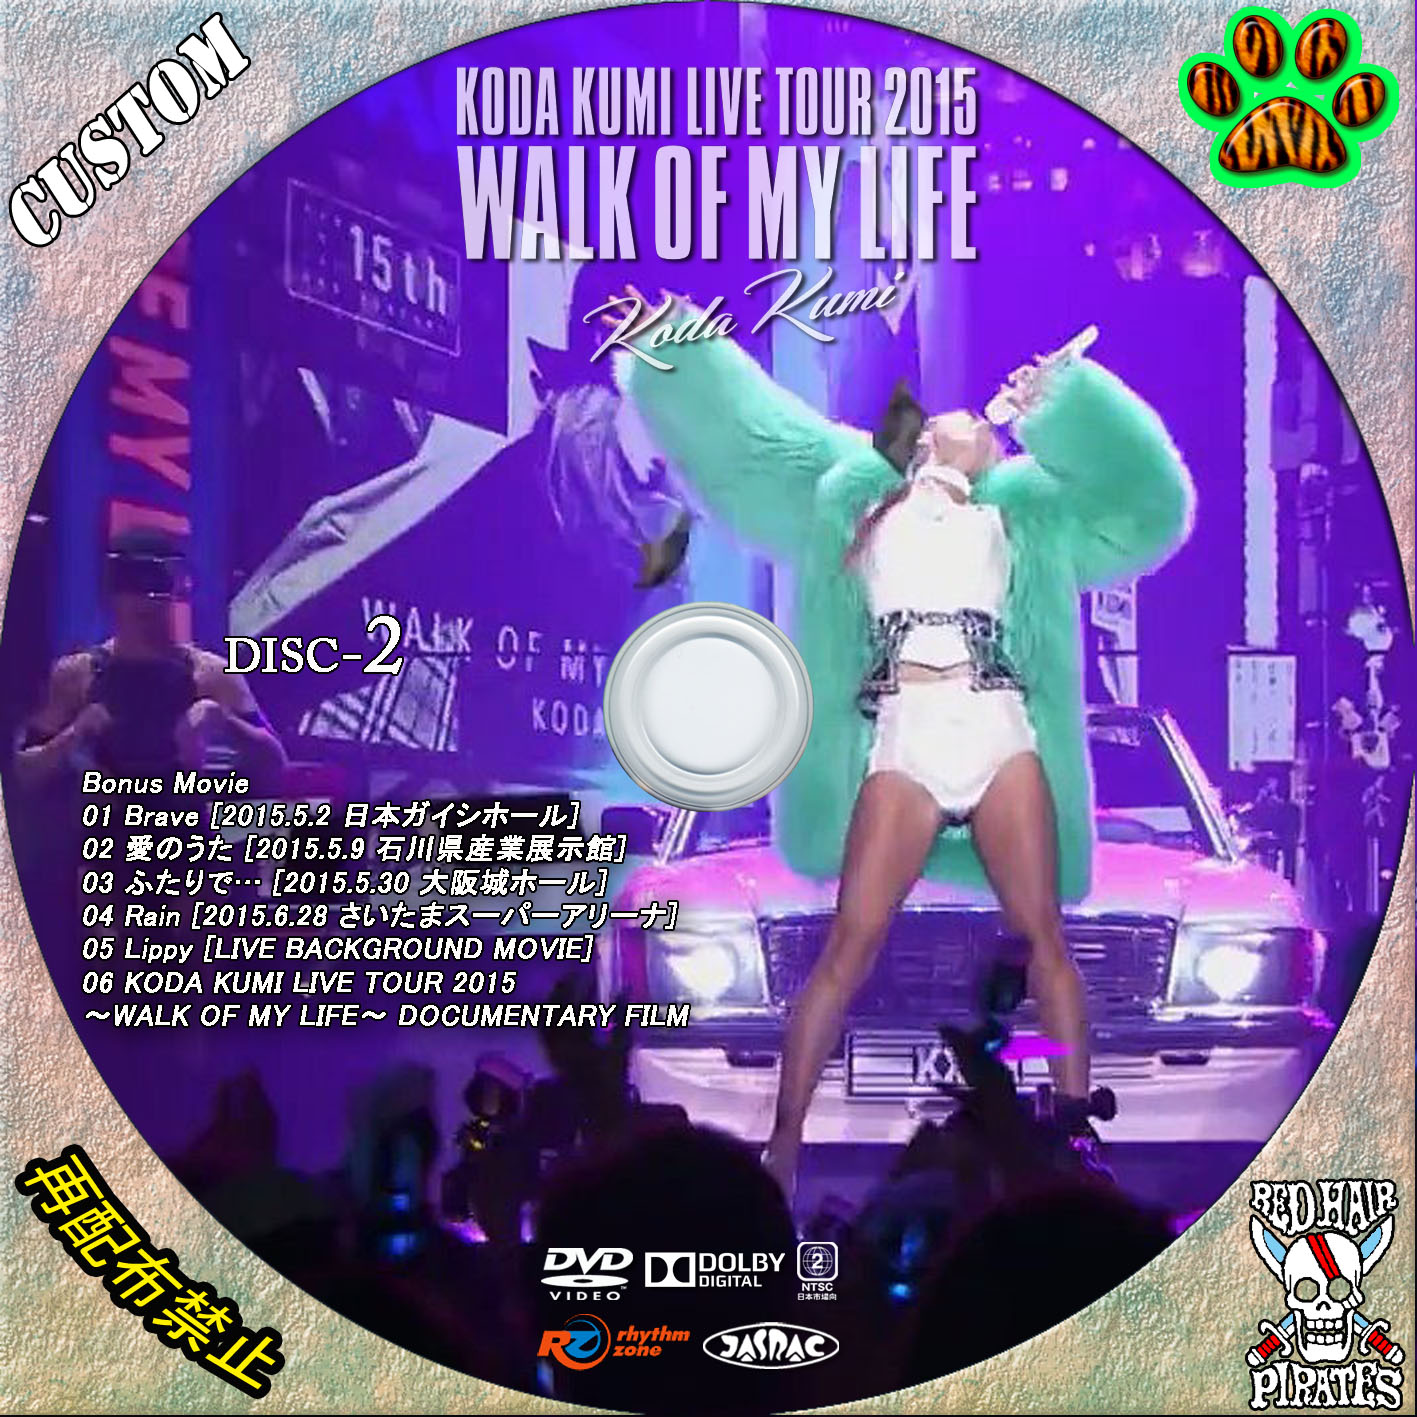 Koda Kumi 15th Anniversary Live Tour 2015 WALK OF MY LIFE - 赤髪船長のCUSTOMラベル